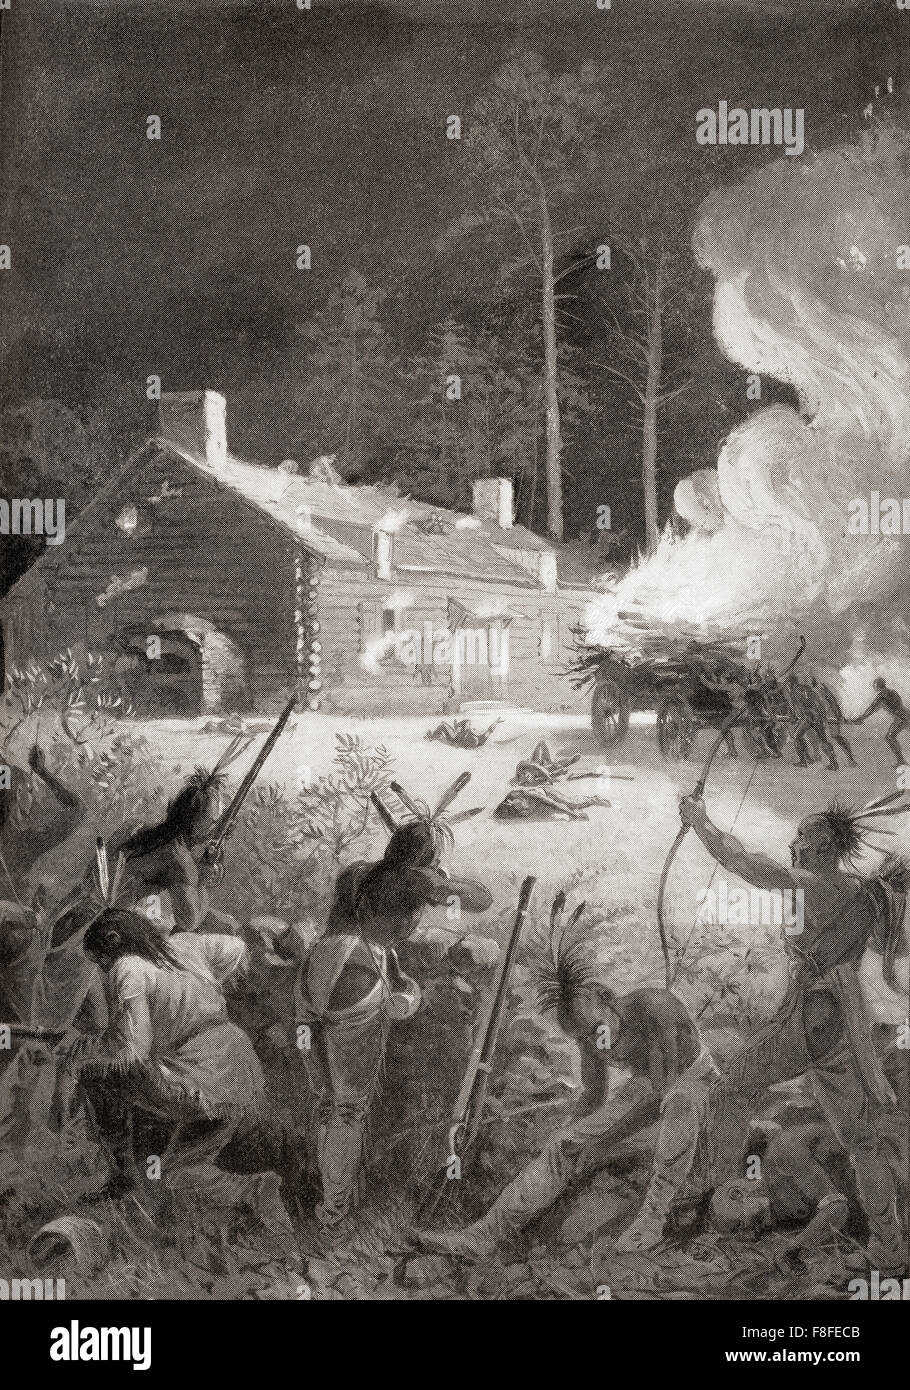 Capture of Brookfield, Massachusetts, North America by Nipmucks in 1675 during King Philip's War, aka First Indian War, Metacom's War, Metacomet's War, or Metacom's Rebellion. Stock Photo